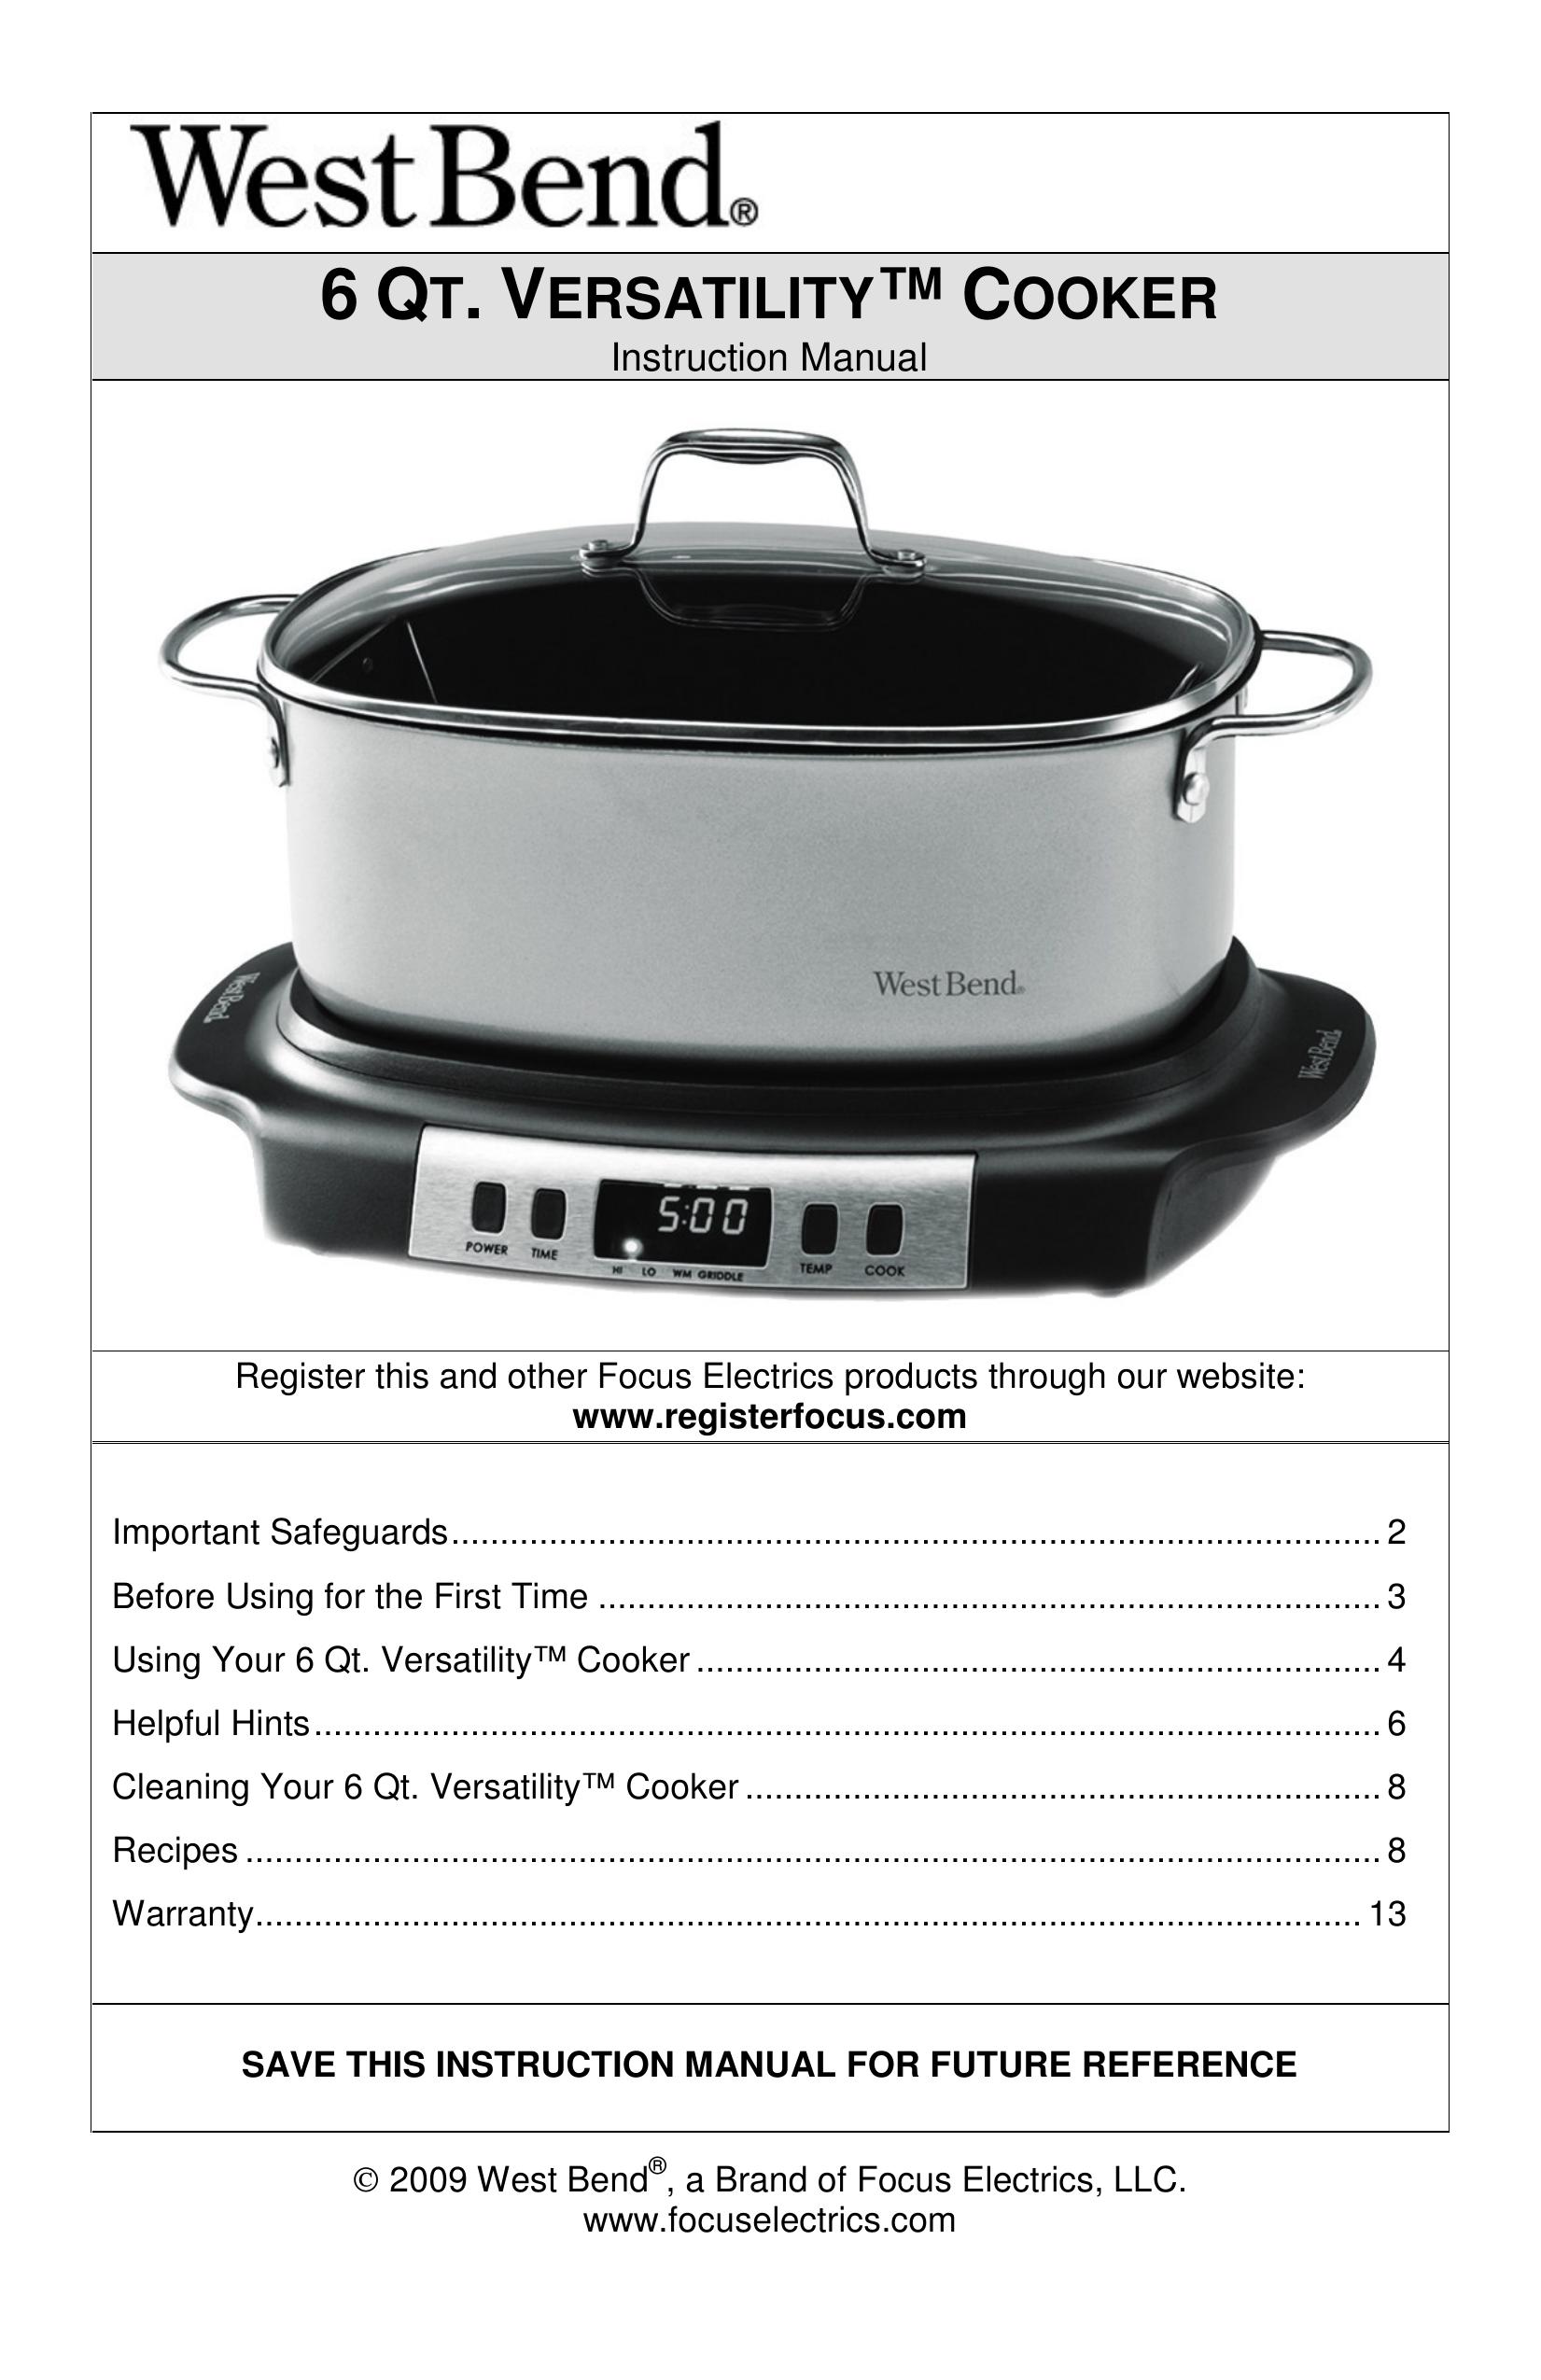 West Bend L5800 Slow Cooker User Manual